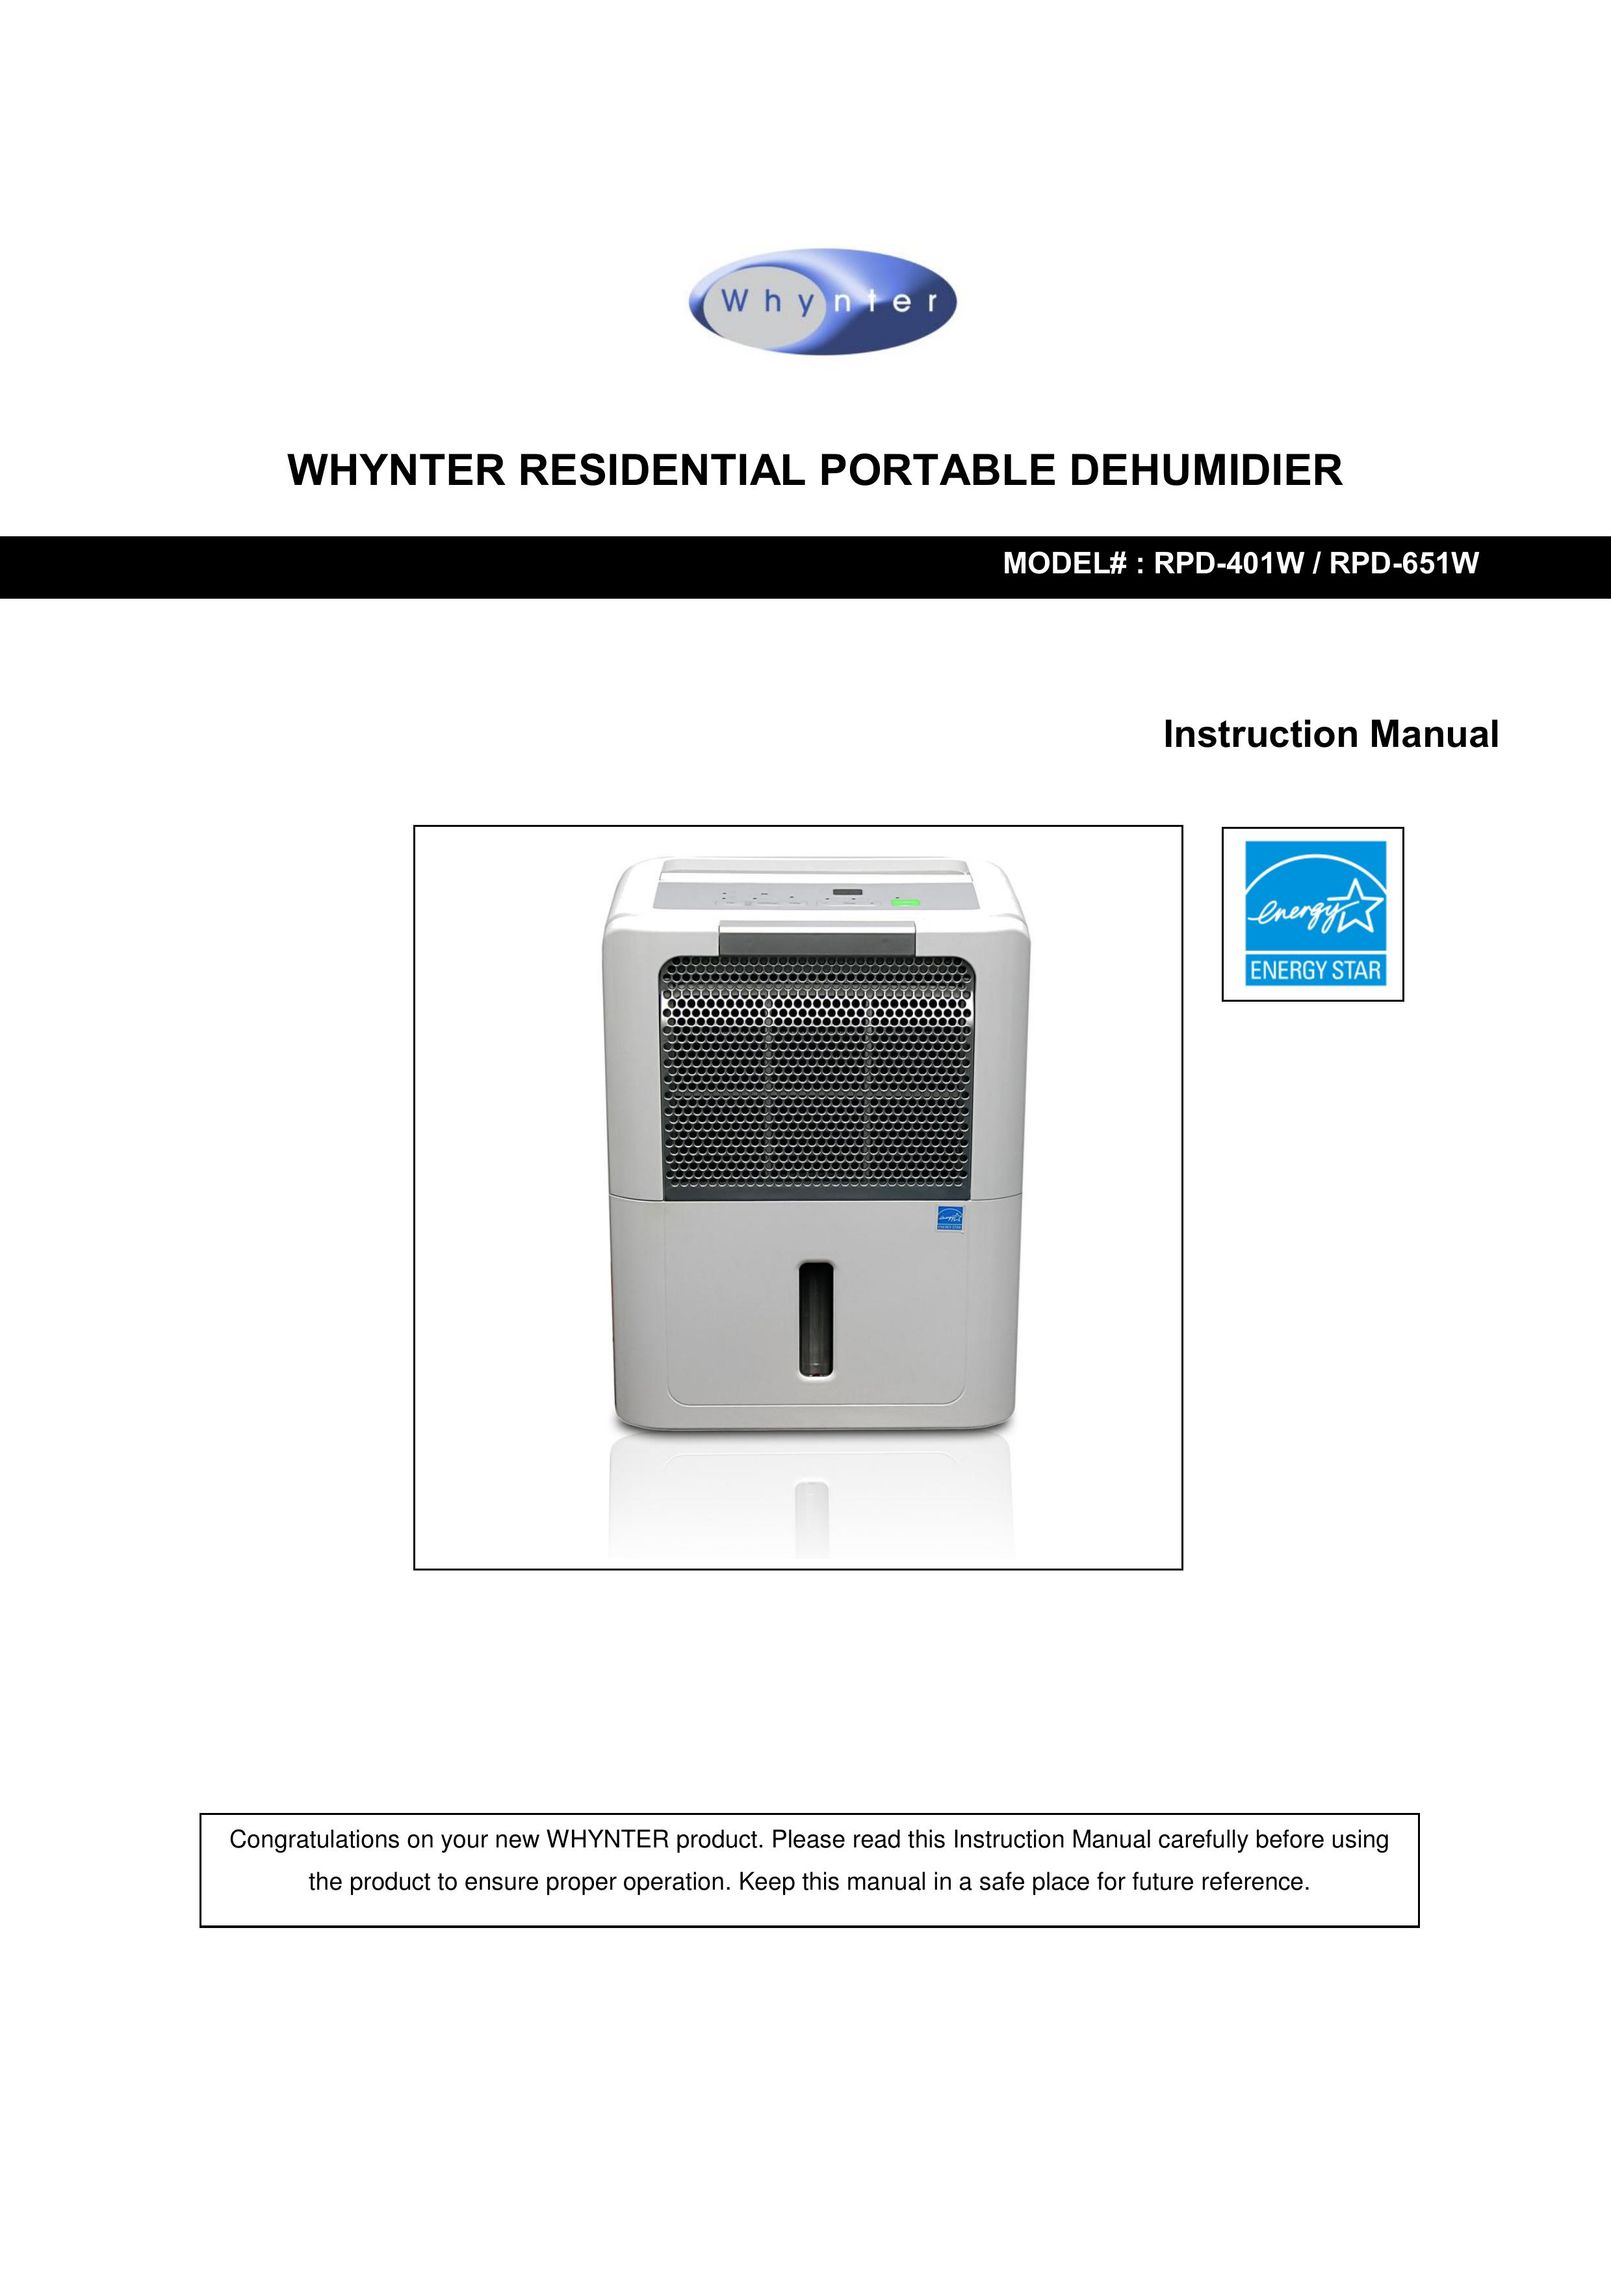 Whynter RPD-401W Dehumidifier User Manual